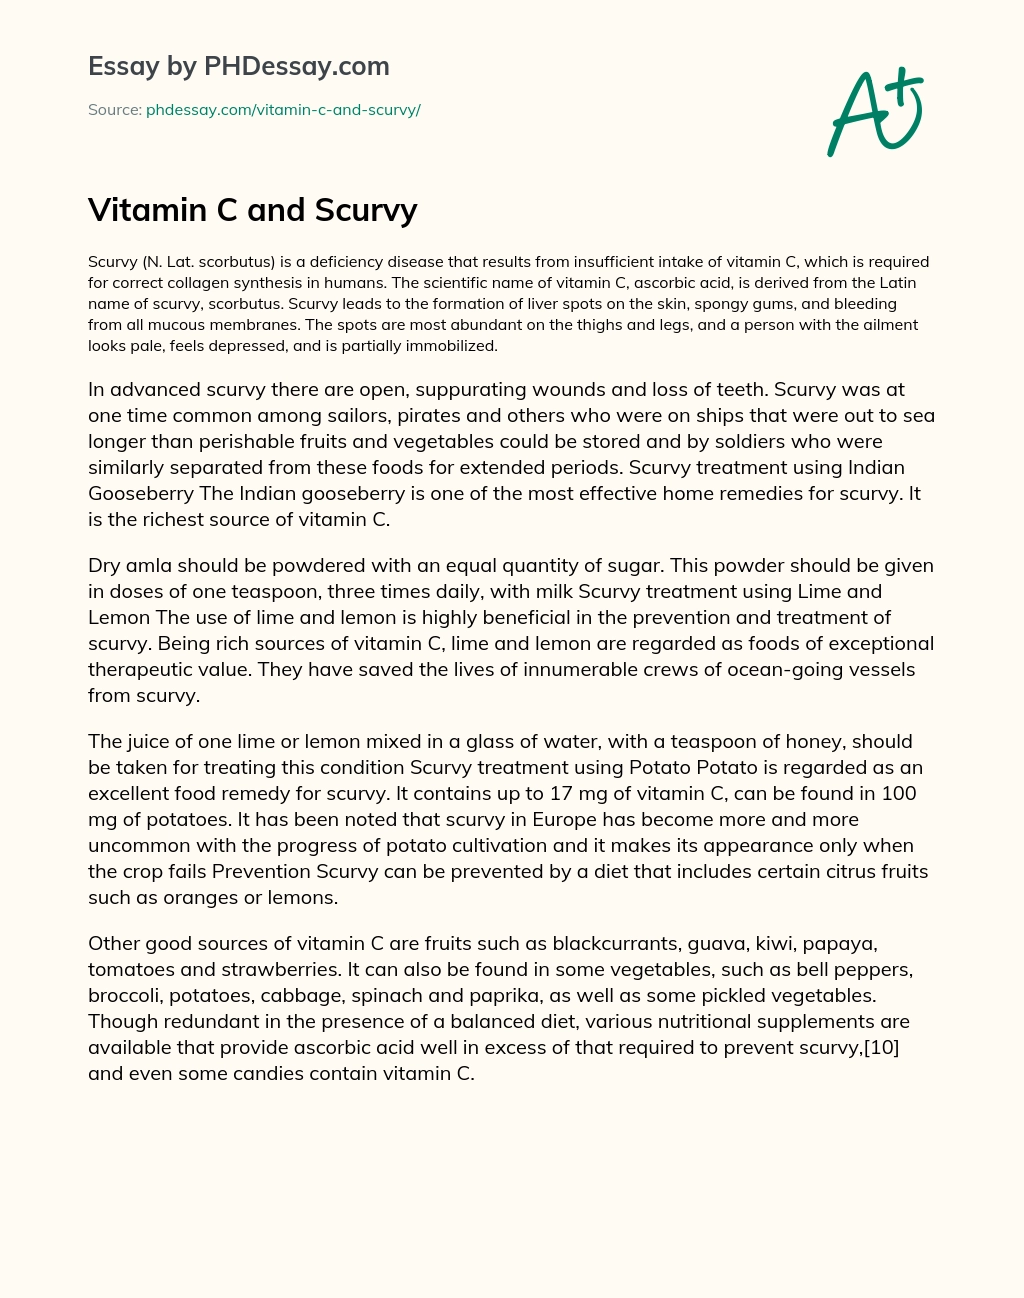 Vitamin C and Scurvy essay